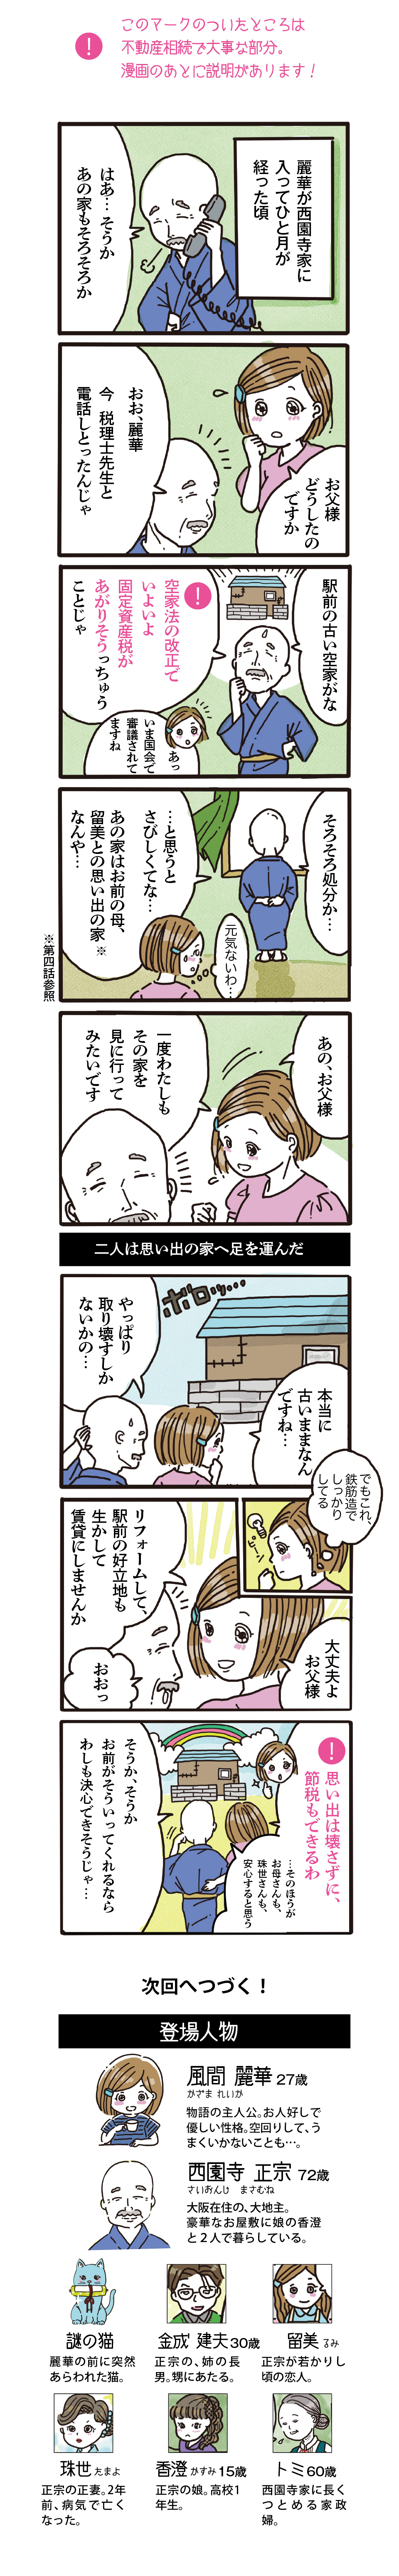 【web漫画】華麗なるSOUZOKU #11